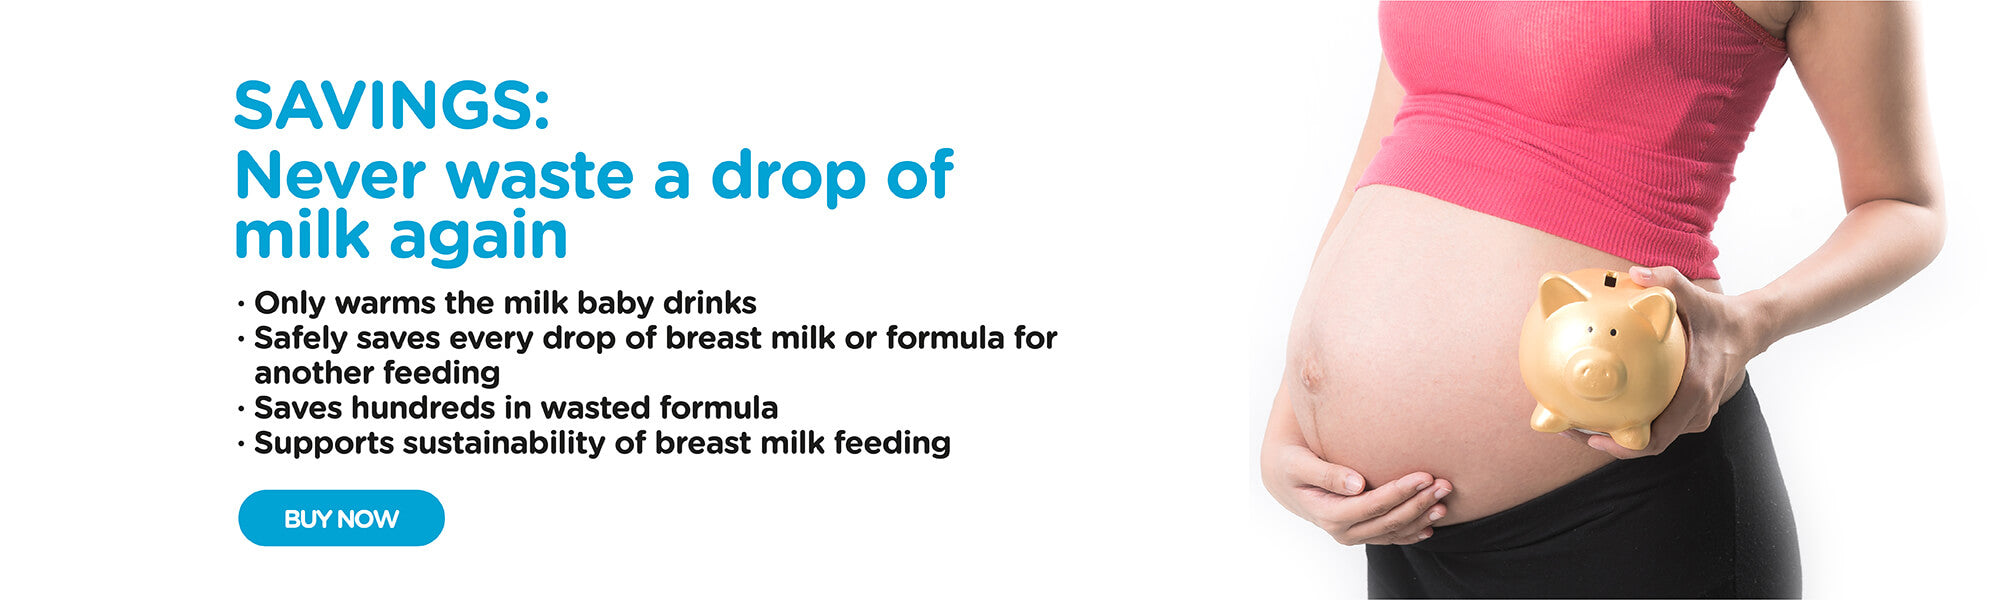 YOOMI ZEN 3S SAVINGS: Never waste a drop of milk again